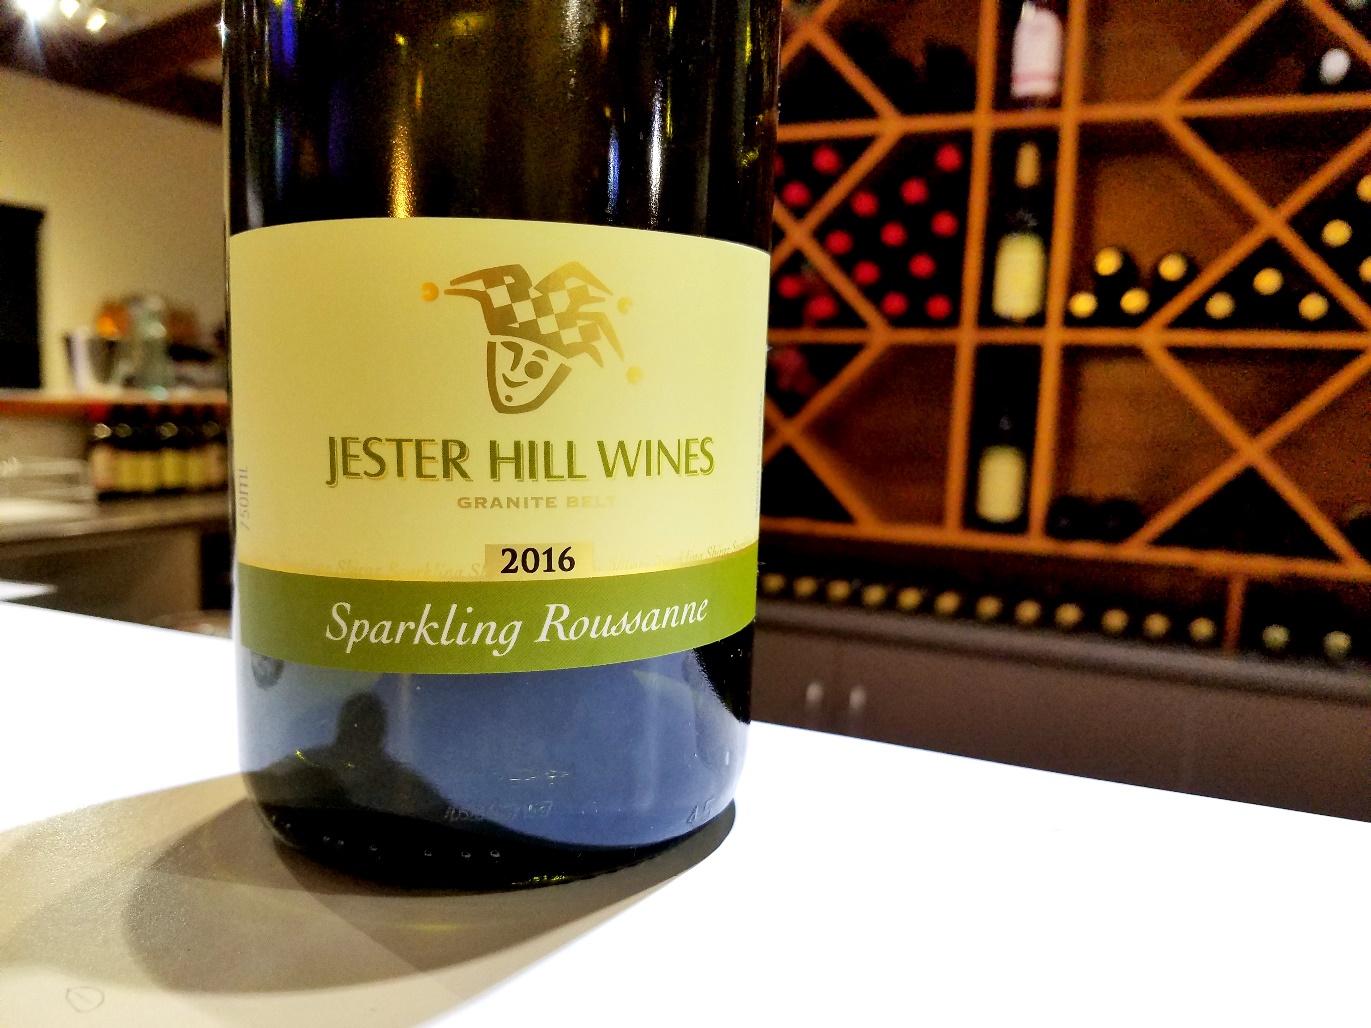 Jester Hill Wines, Sparkling Roussanne 2016, Granite Belt, Queensland, Australia, Wine Casual